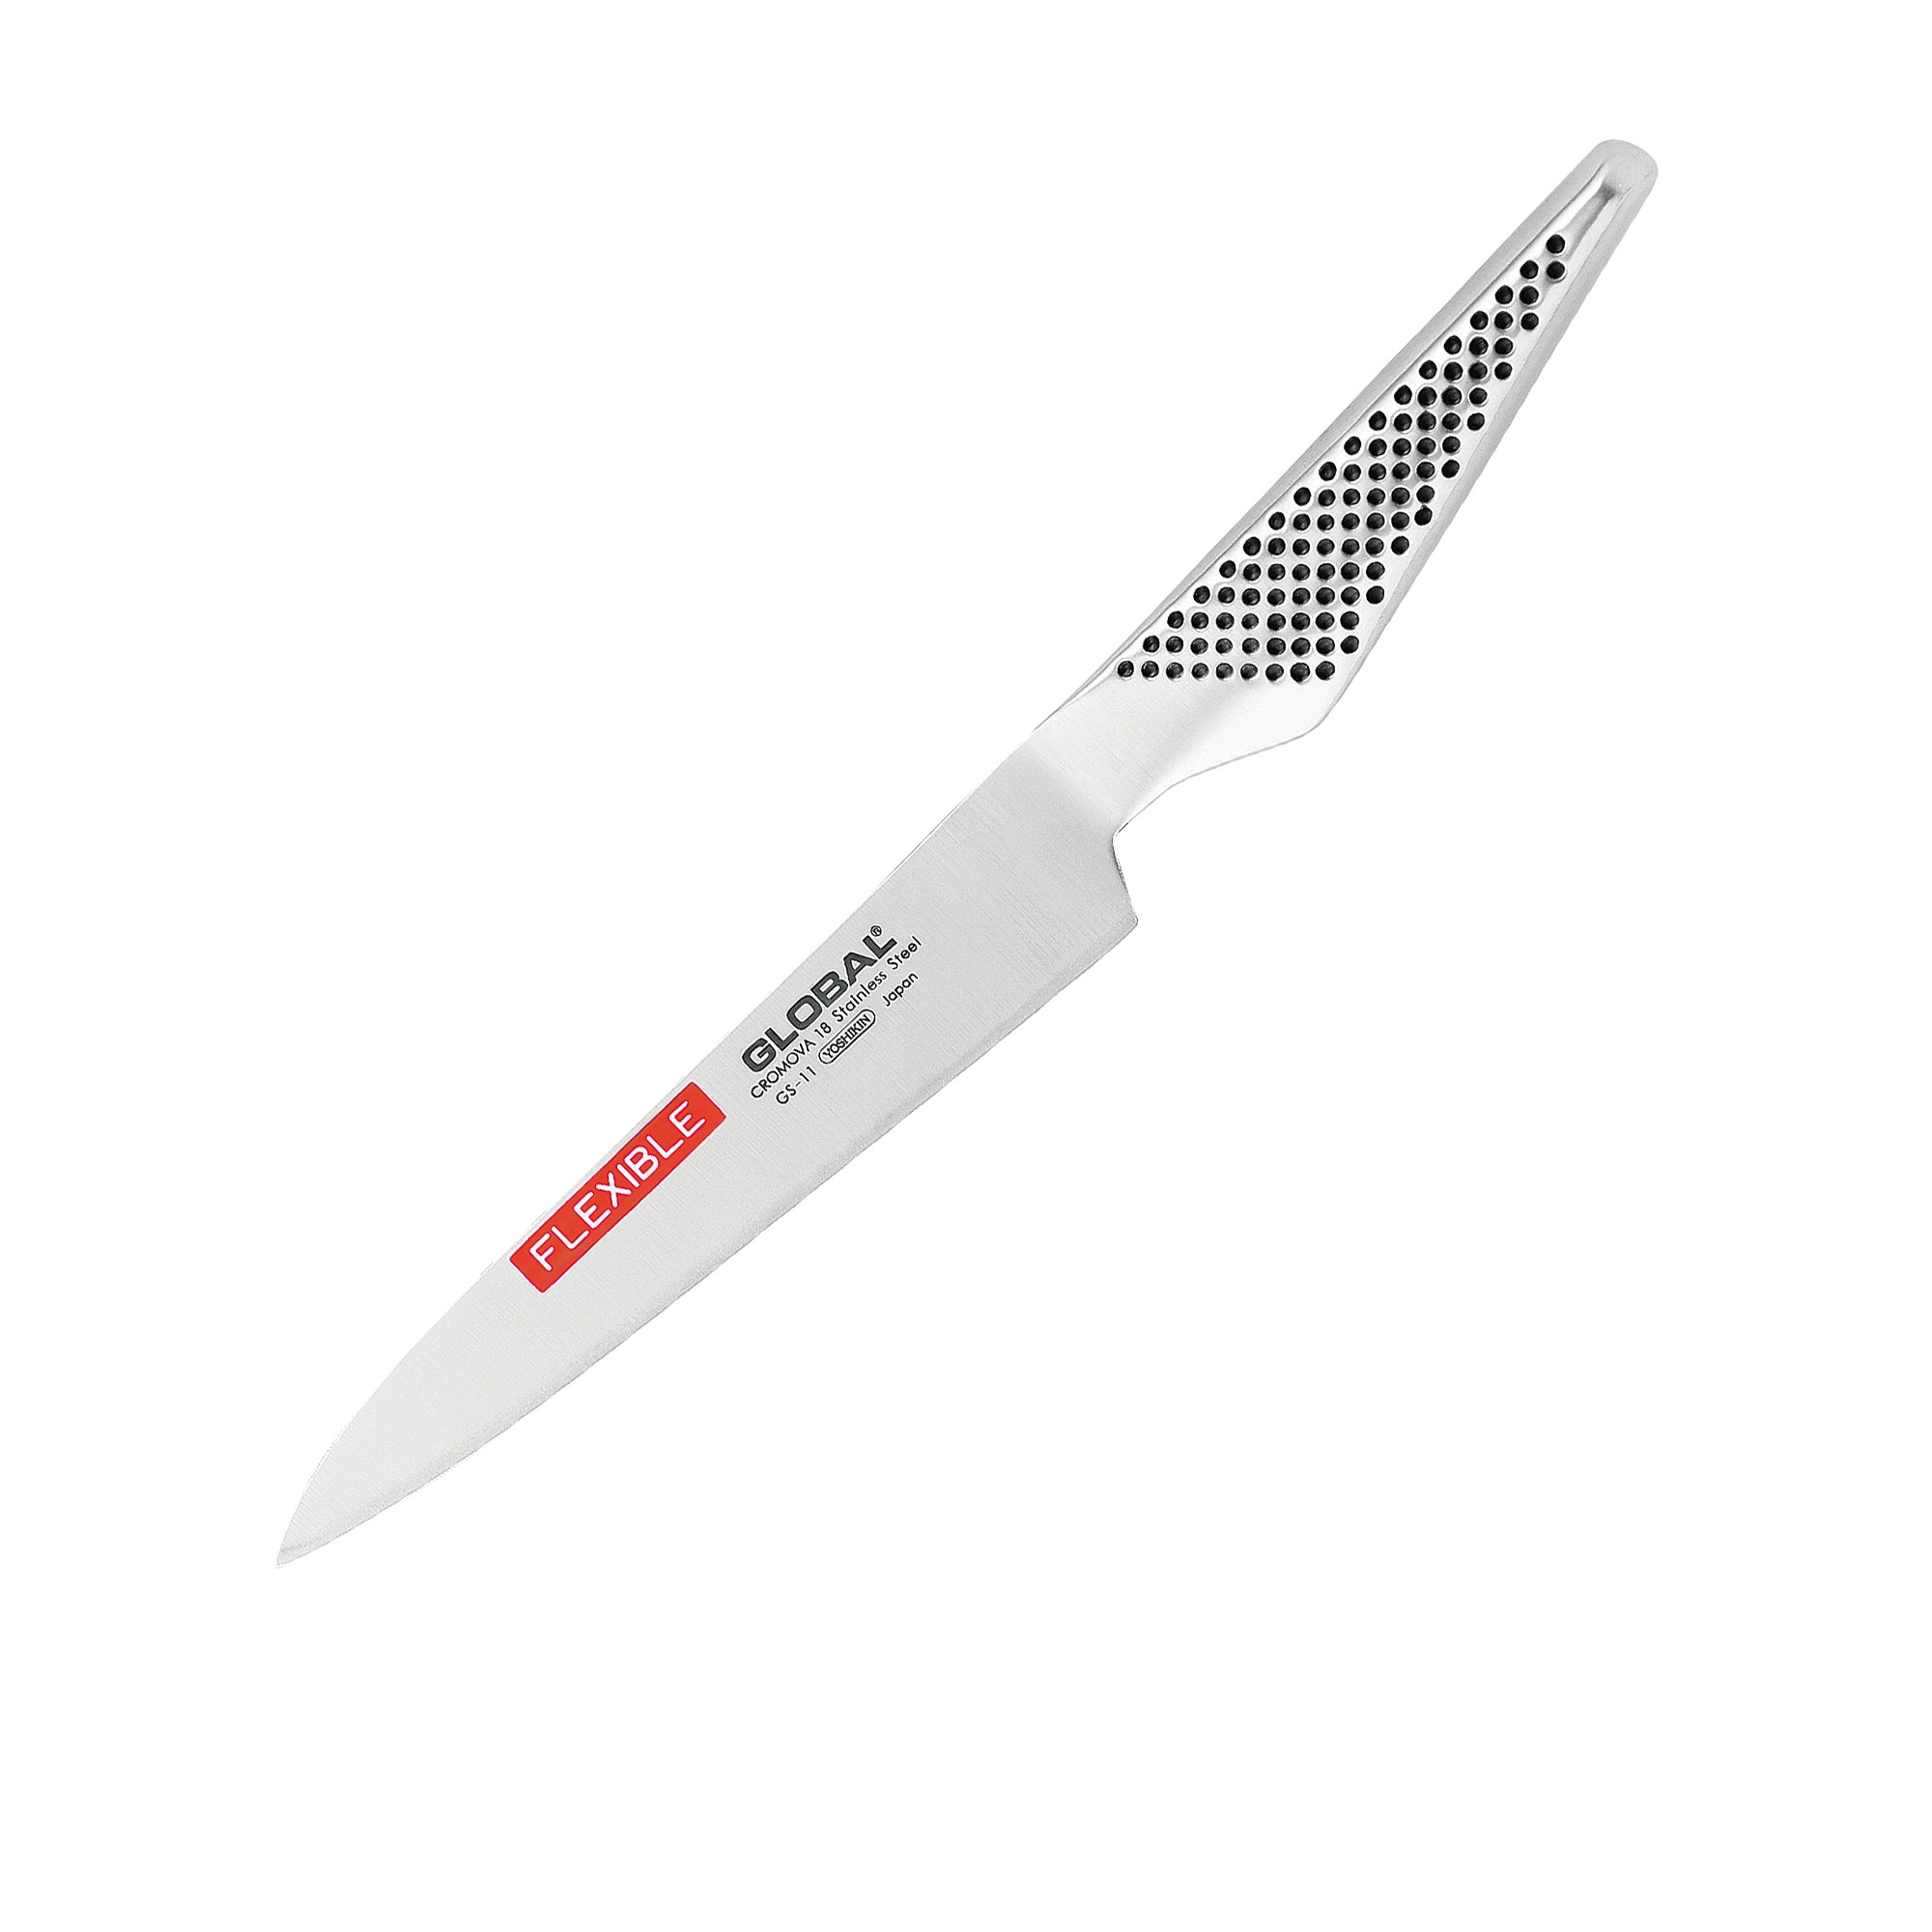 Global GS-11 Flexible Utility Knife 15cm Image 1